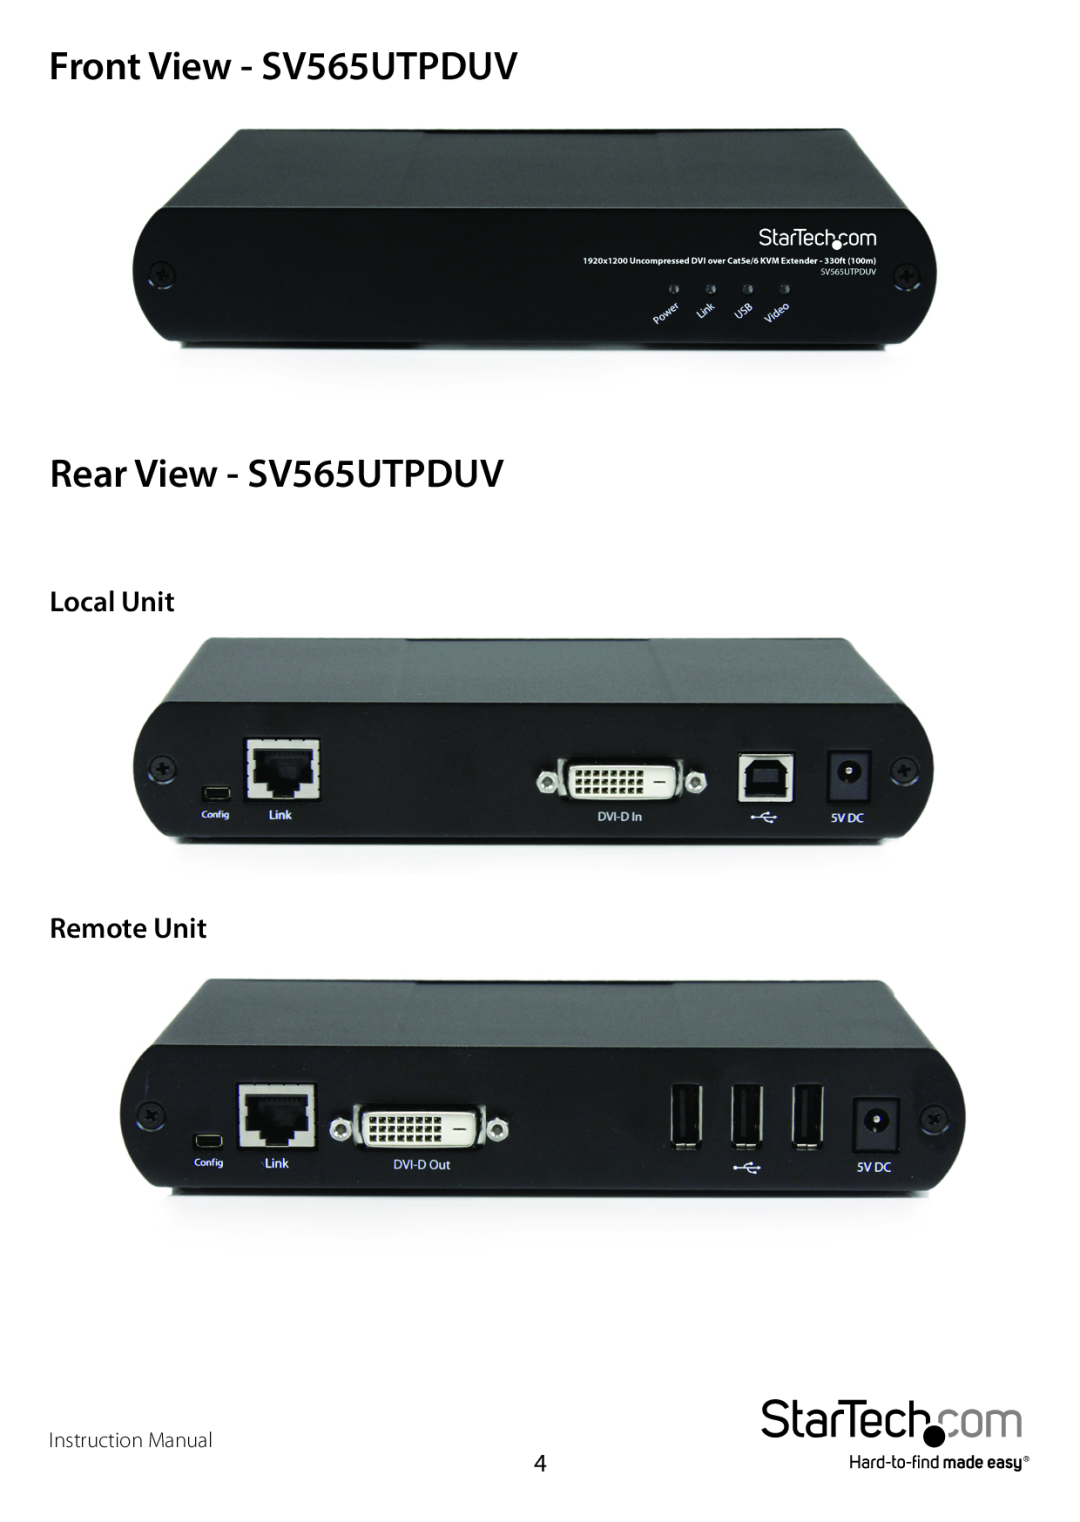 StarTech.com dvi over cat5e/6 kvm extender manual Front View - SV565UTPDUV Rear View - SV565UTPDUV, Local Unit Remote Unit 